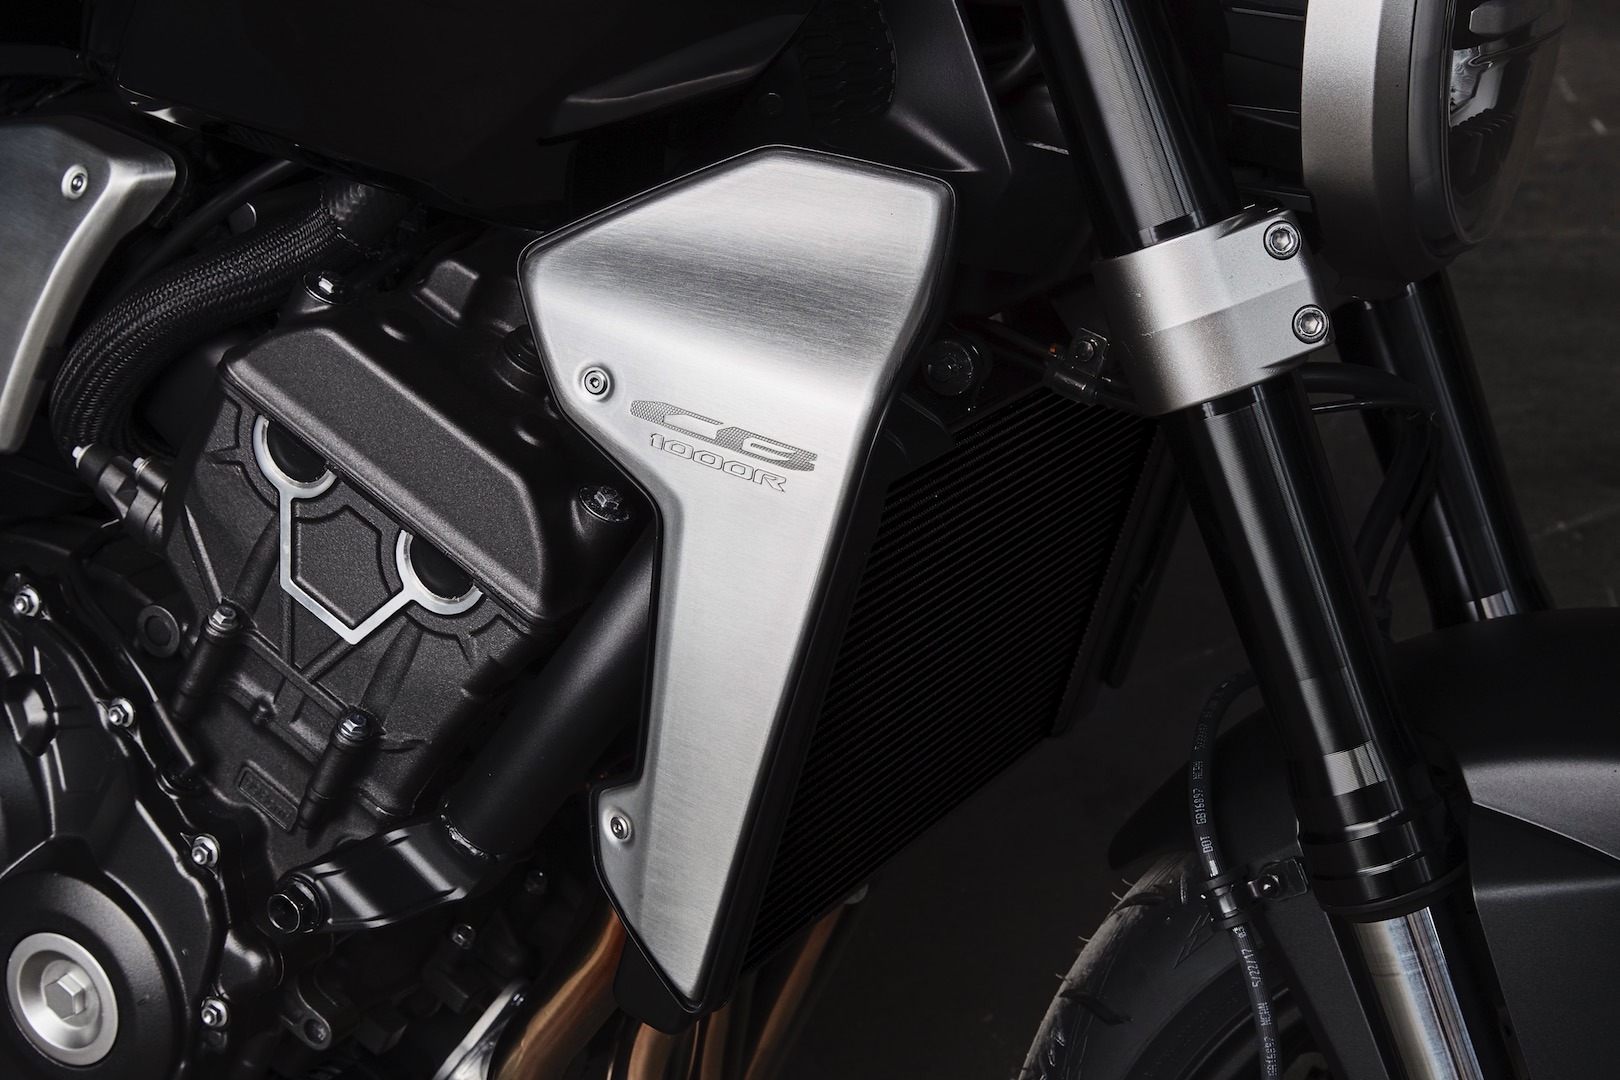 2018-Honda-CB1000R-First-Look-naked-sport-motorcycle-1.jpg